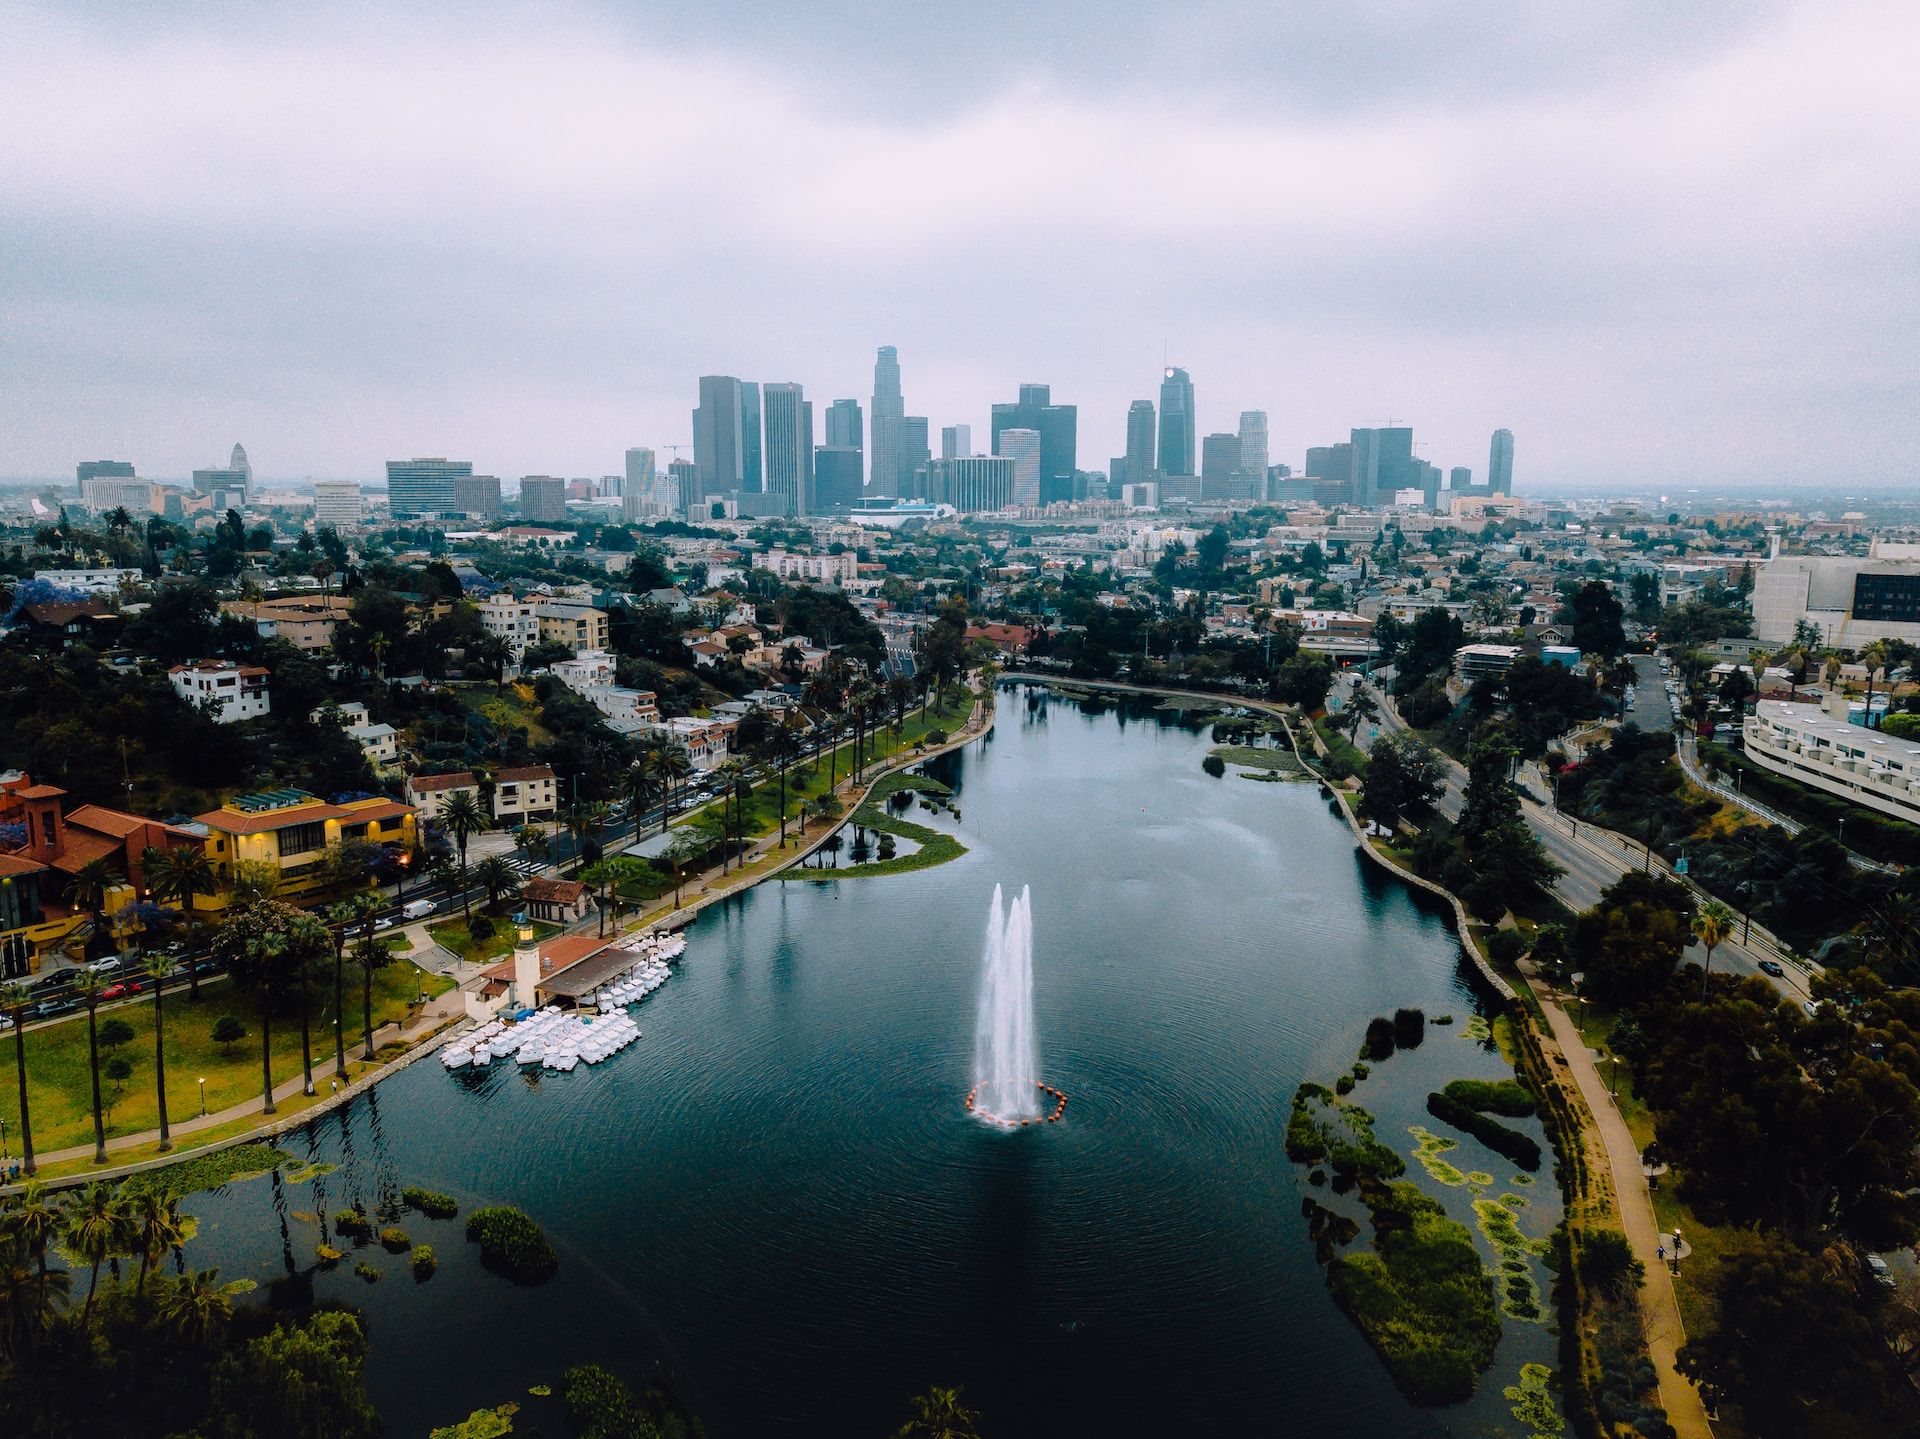 Echo Park Lake in Los Angeles, California, USA